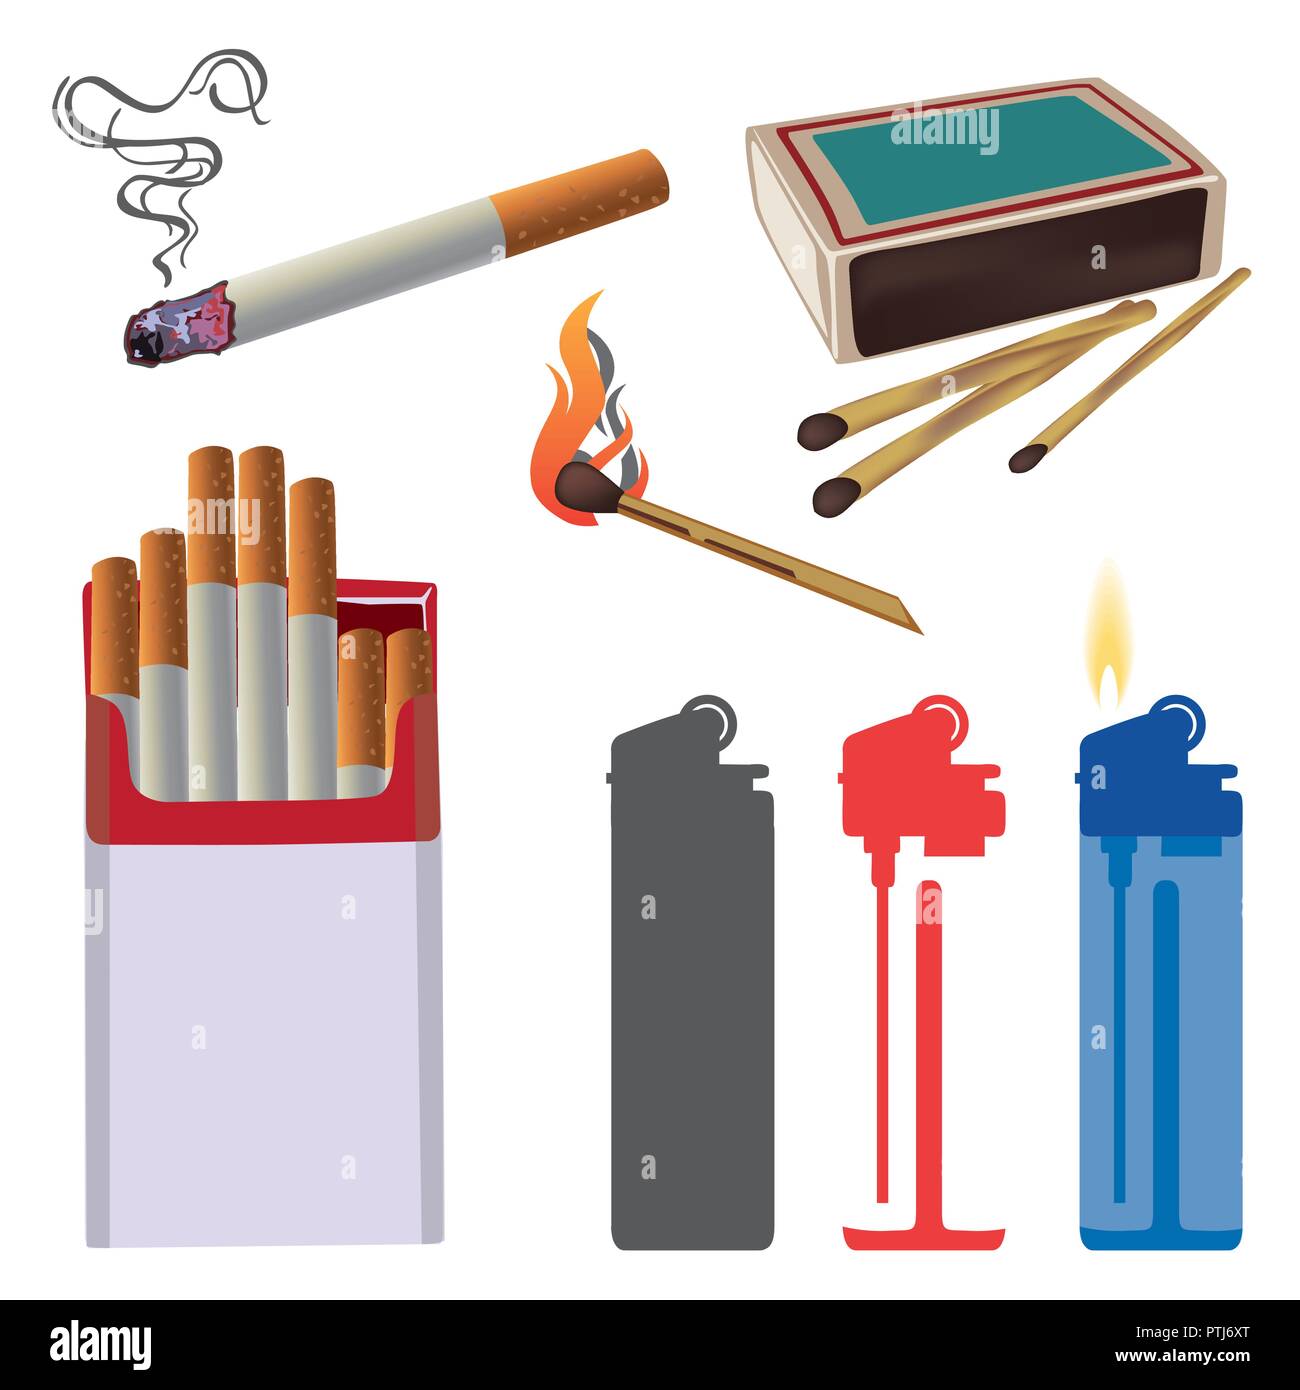 Ensemble de logos vectoriels de briquets, cigarettes, allumettes Illustration de Vecteur